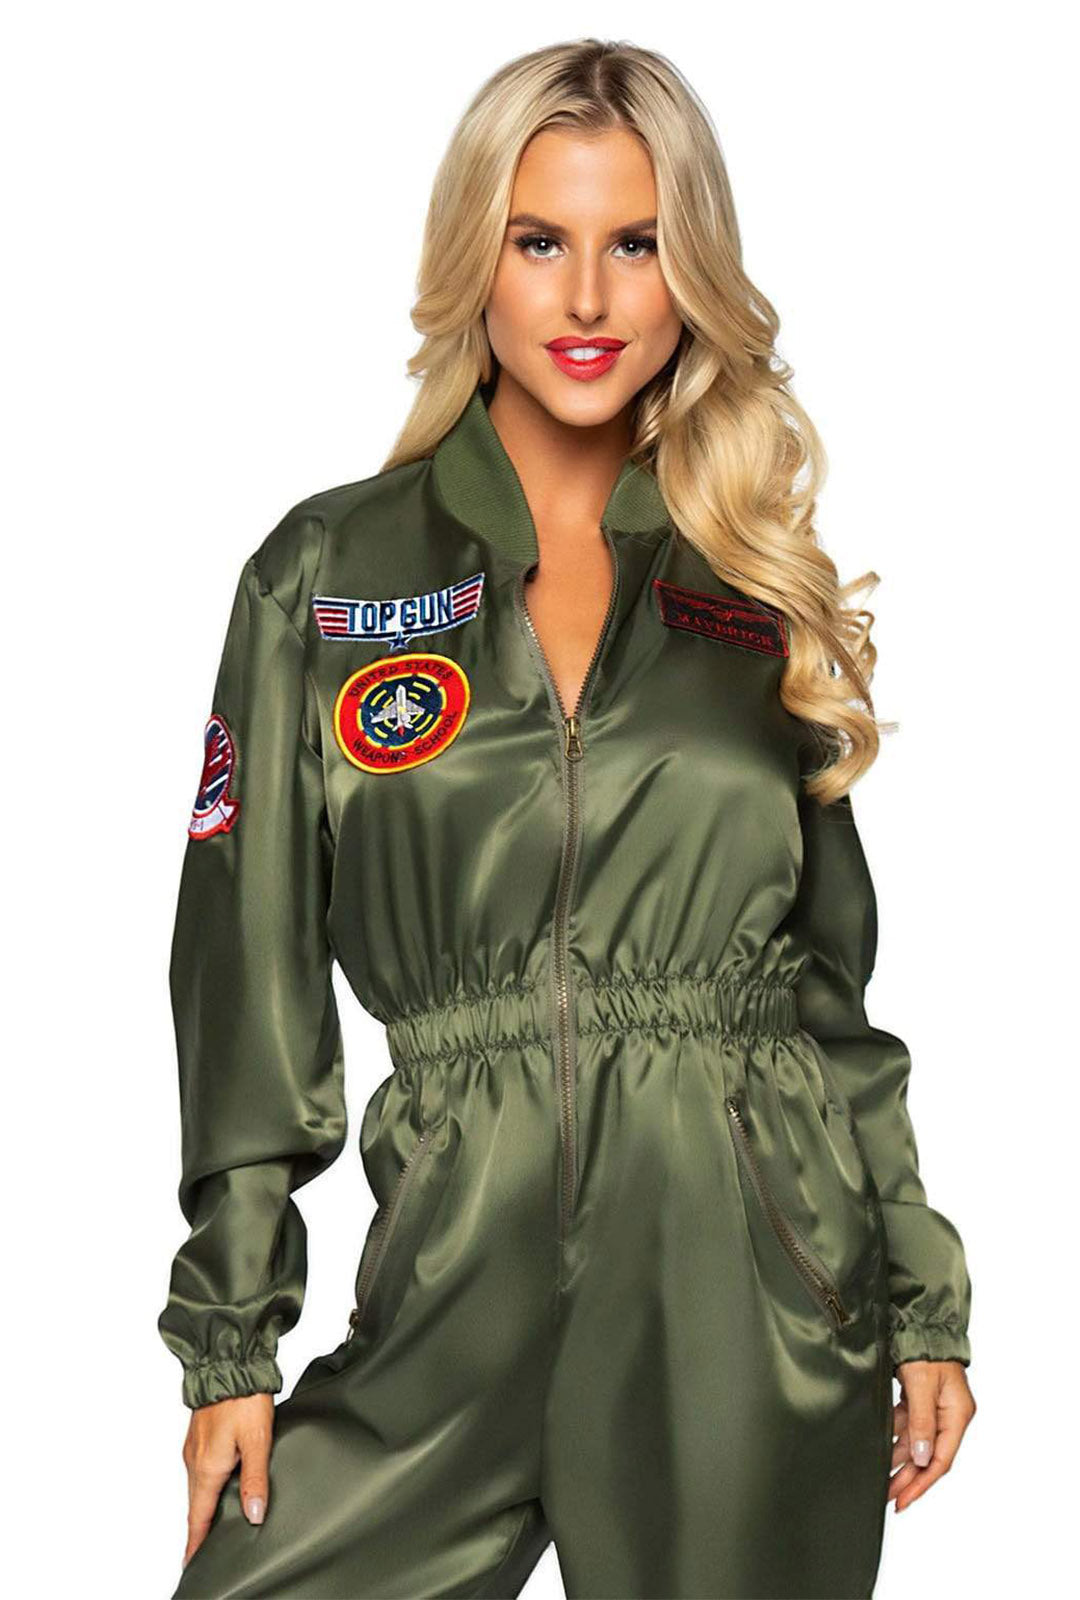 Women's Top Gun Parachute Flight Suit